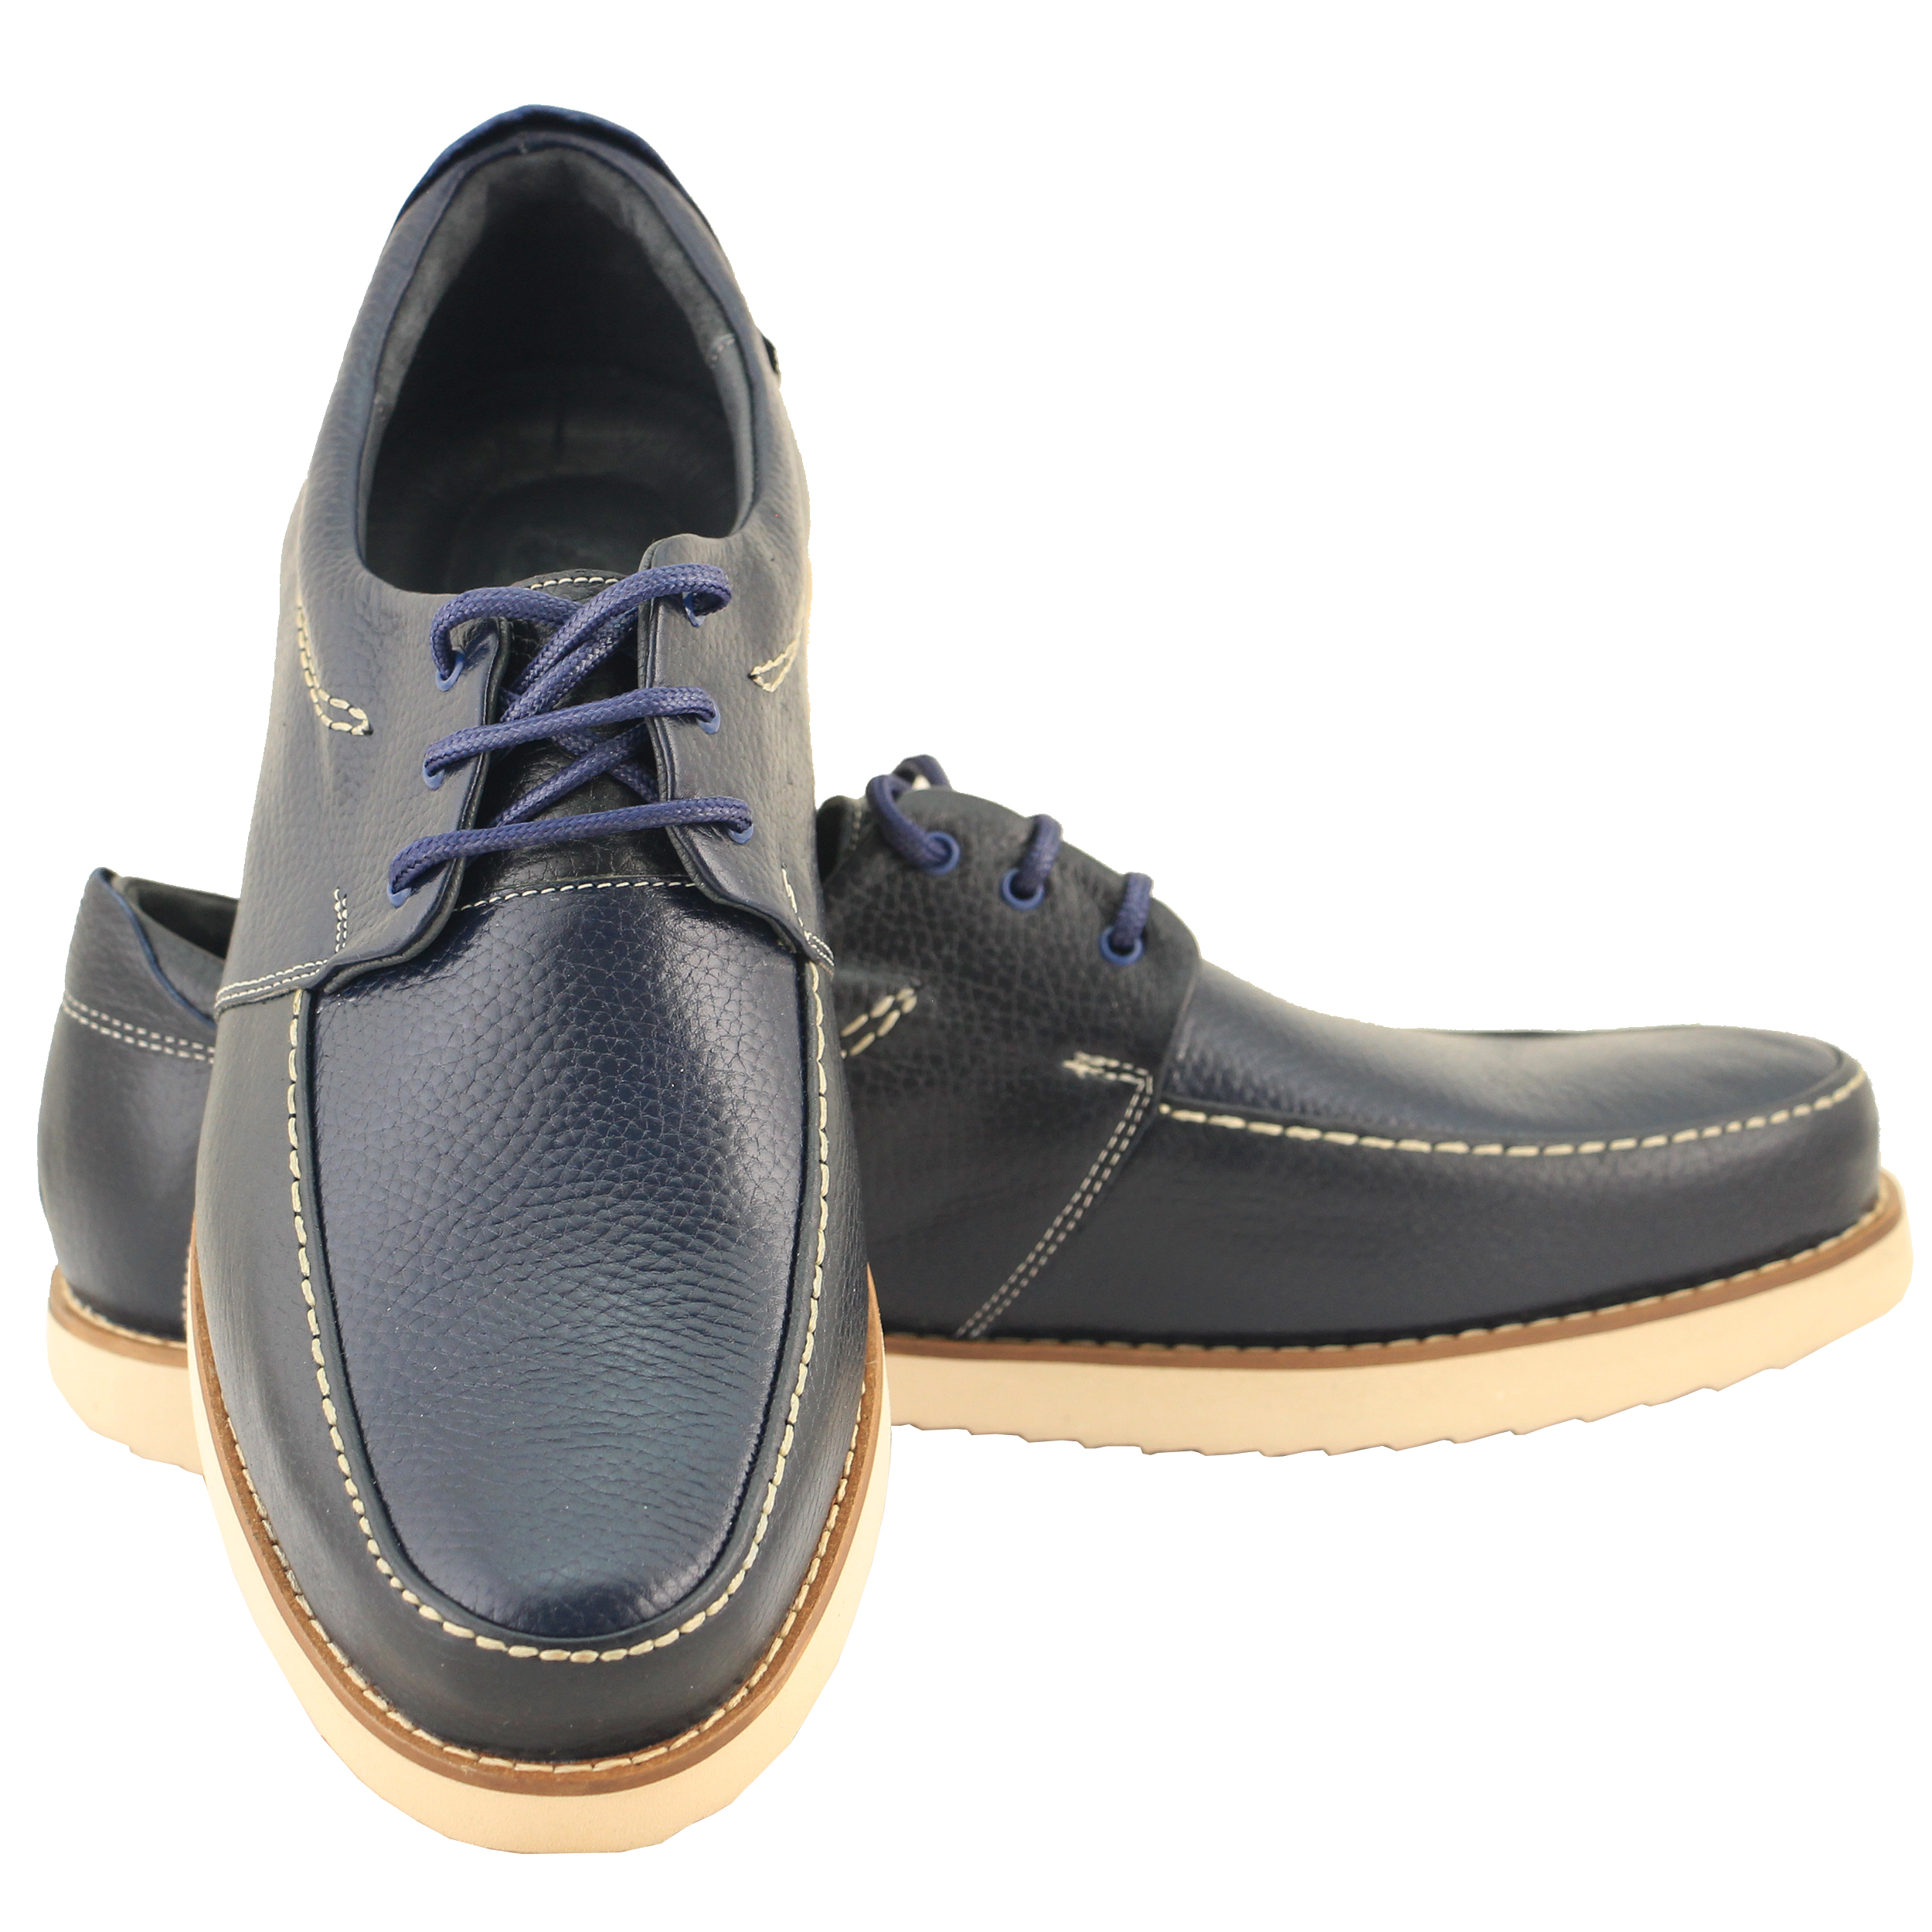 ADINCHARM leather men's casual shoes, DK101.sr Model 